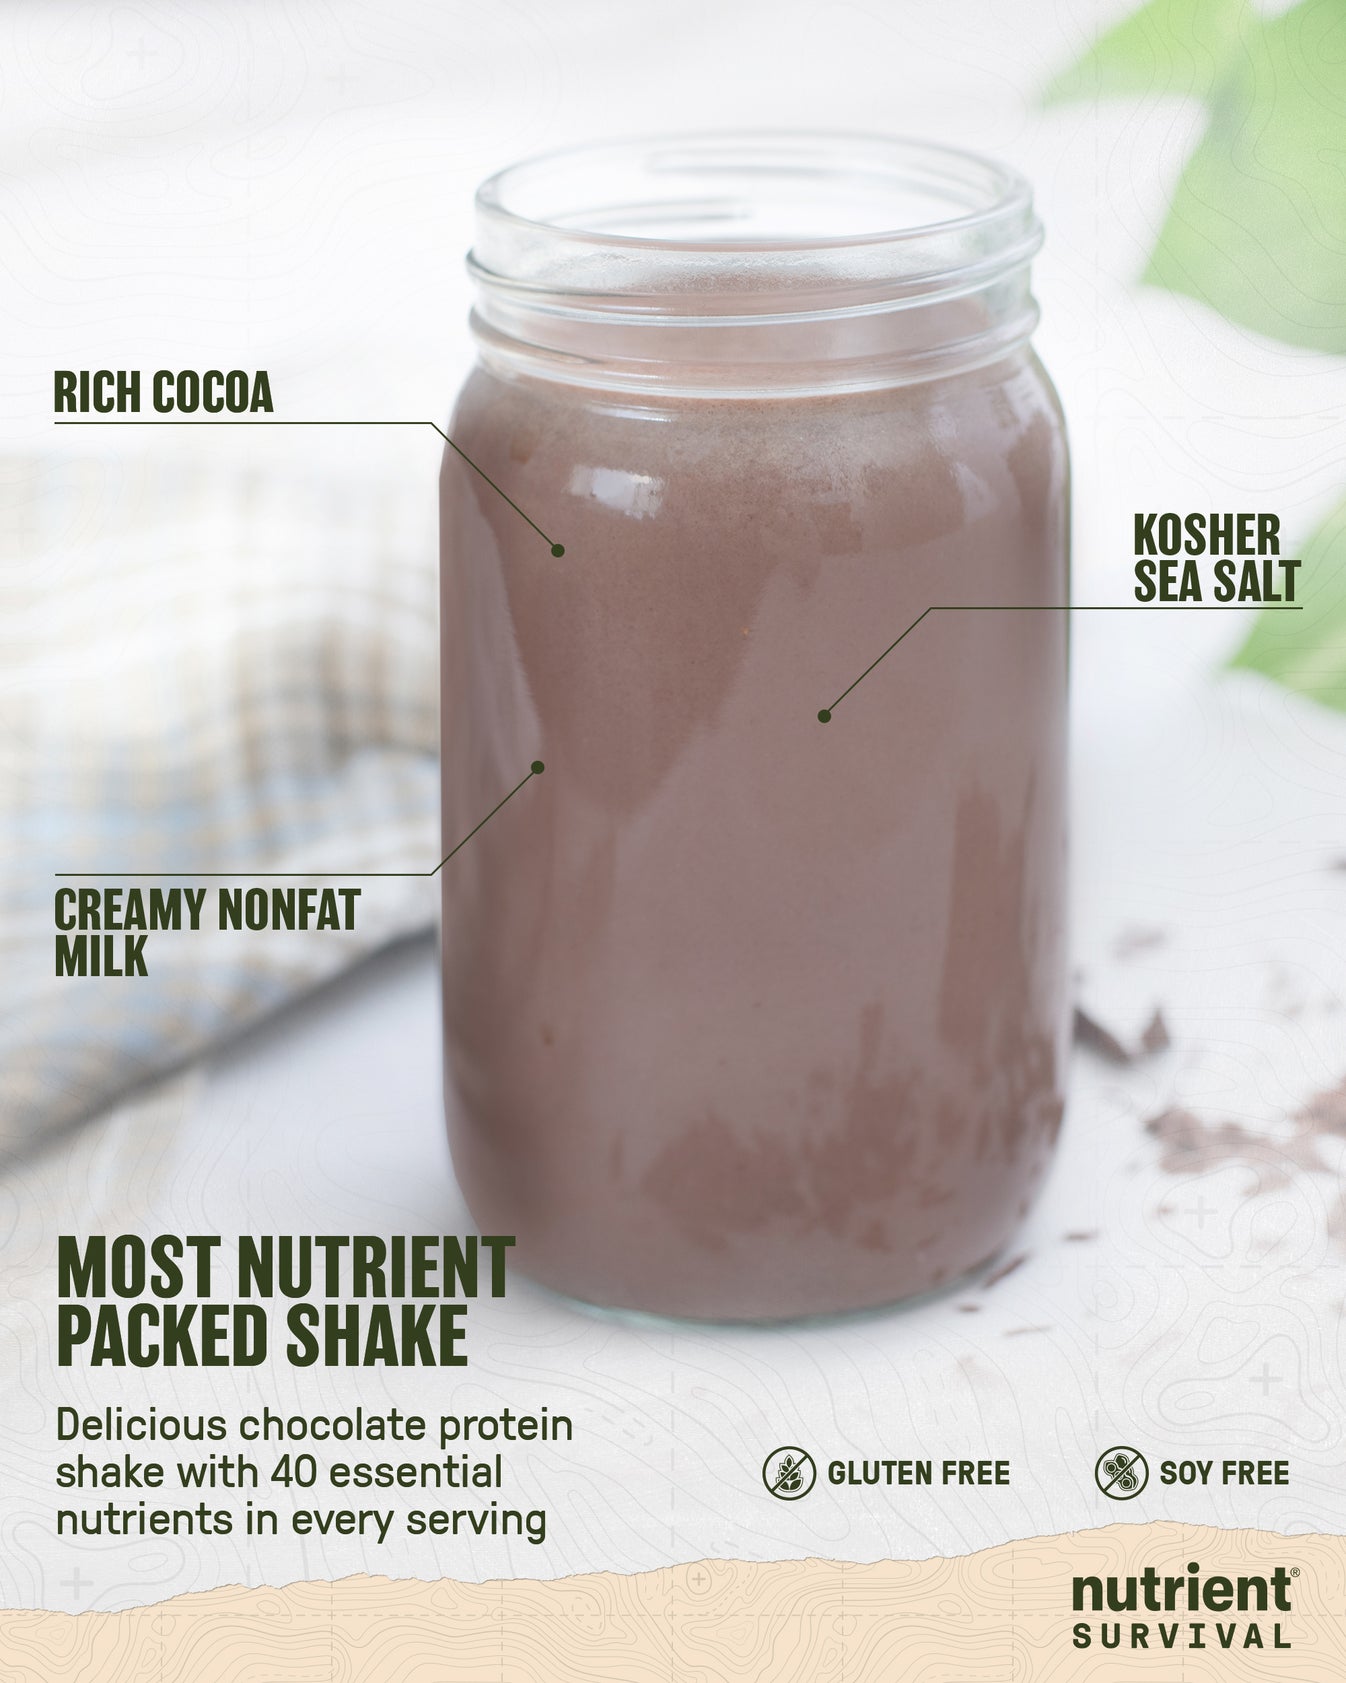 Creamy Chocolate Shake Pantry Pack